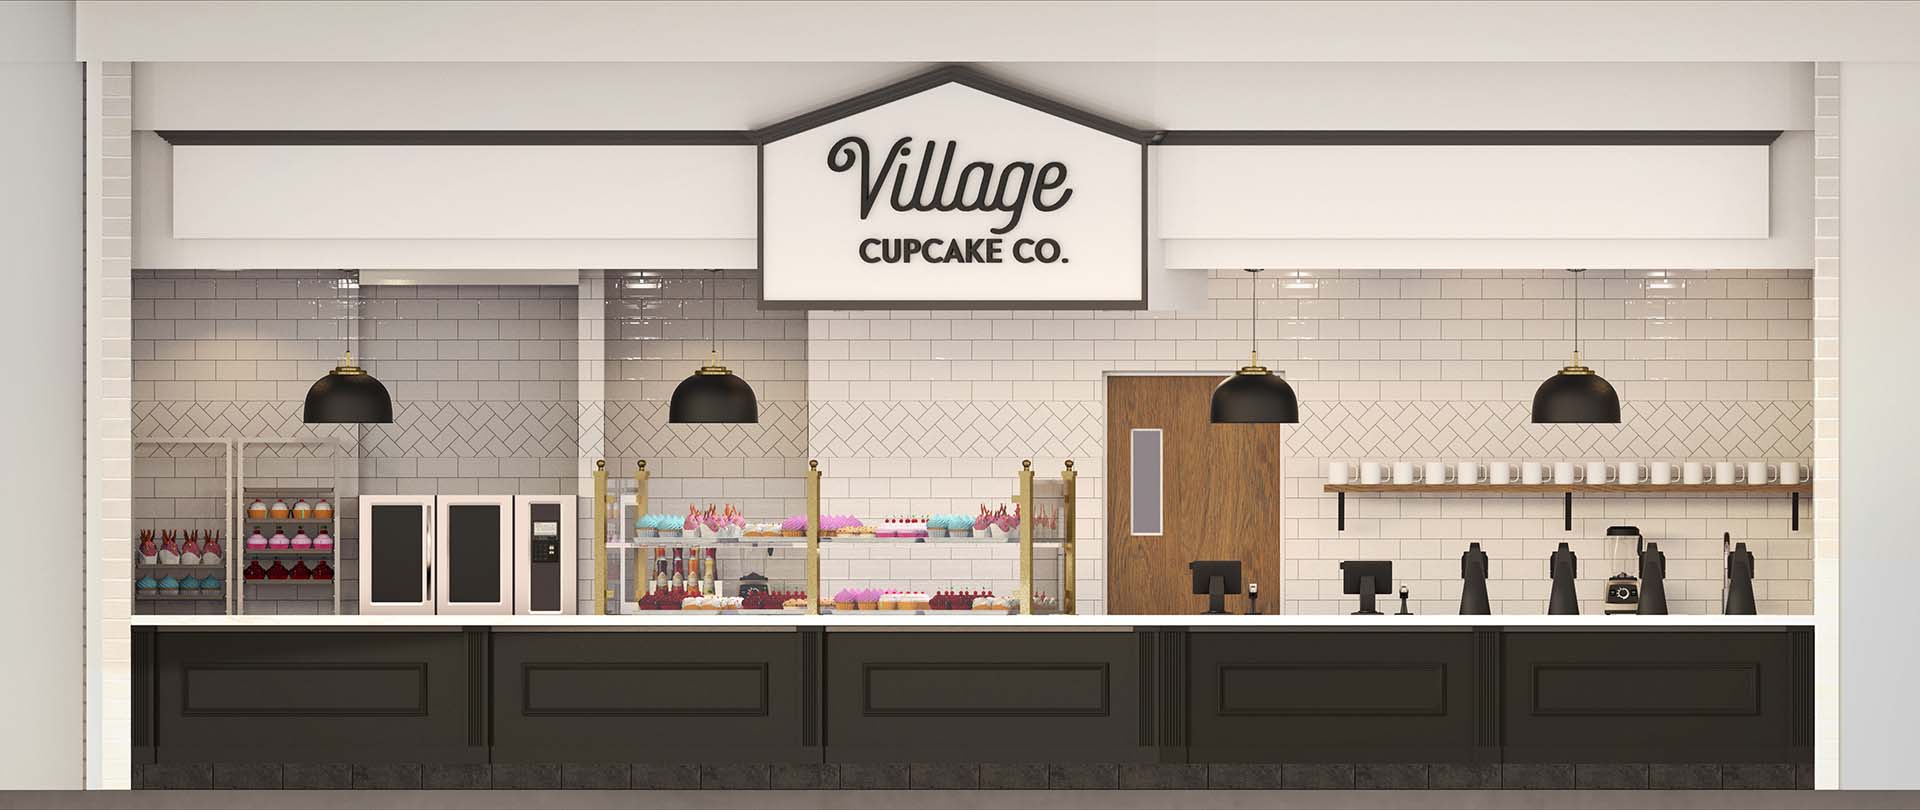 Village Cupcake Company - Commercial - Elevations 4499-VillageCupcakeCompany-dv2-02b-1920.jpg